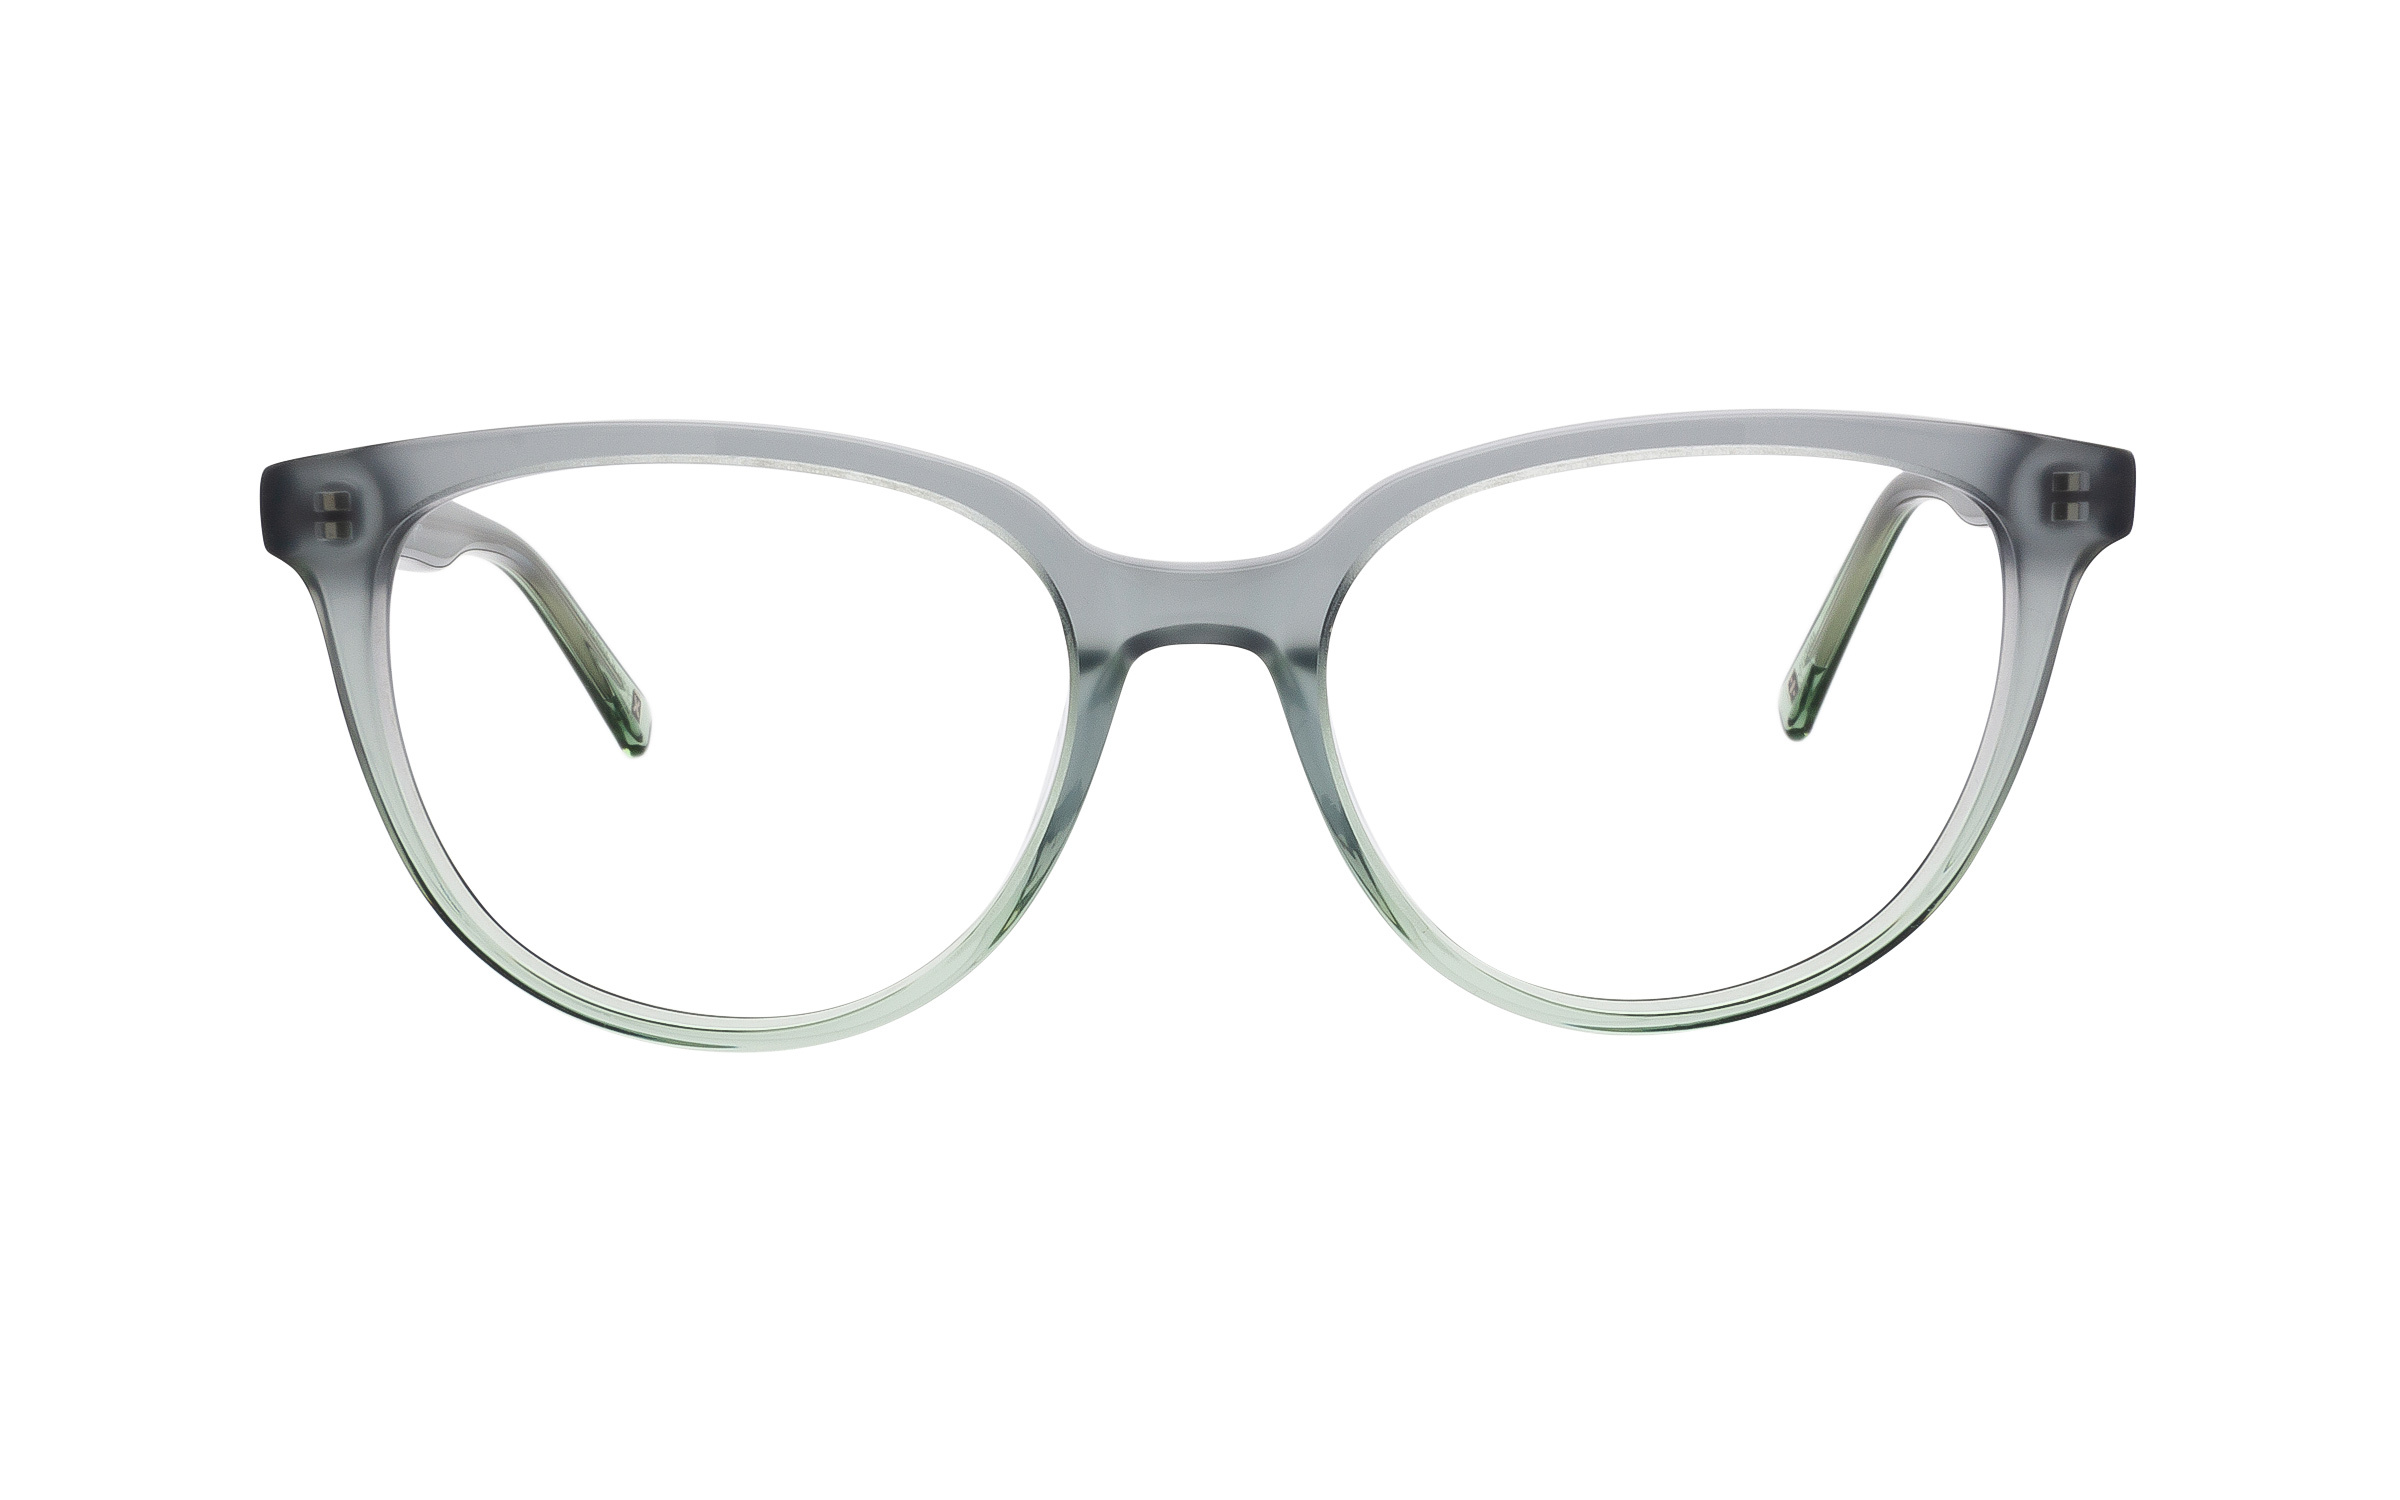 http://www.coastal.com/ - Derek Cardigan Becrux DC216 C04 (52) Eyeglasses and Frame in Shiny Gradient Green/Grey – Online Coastal